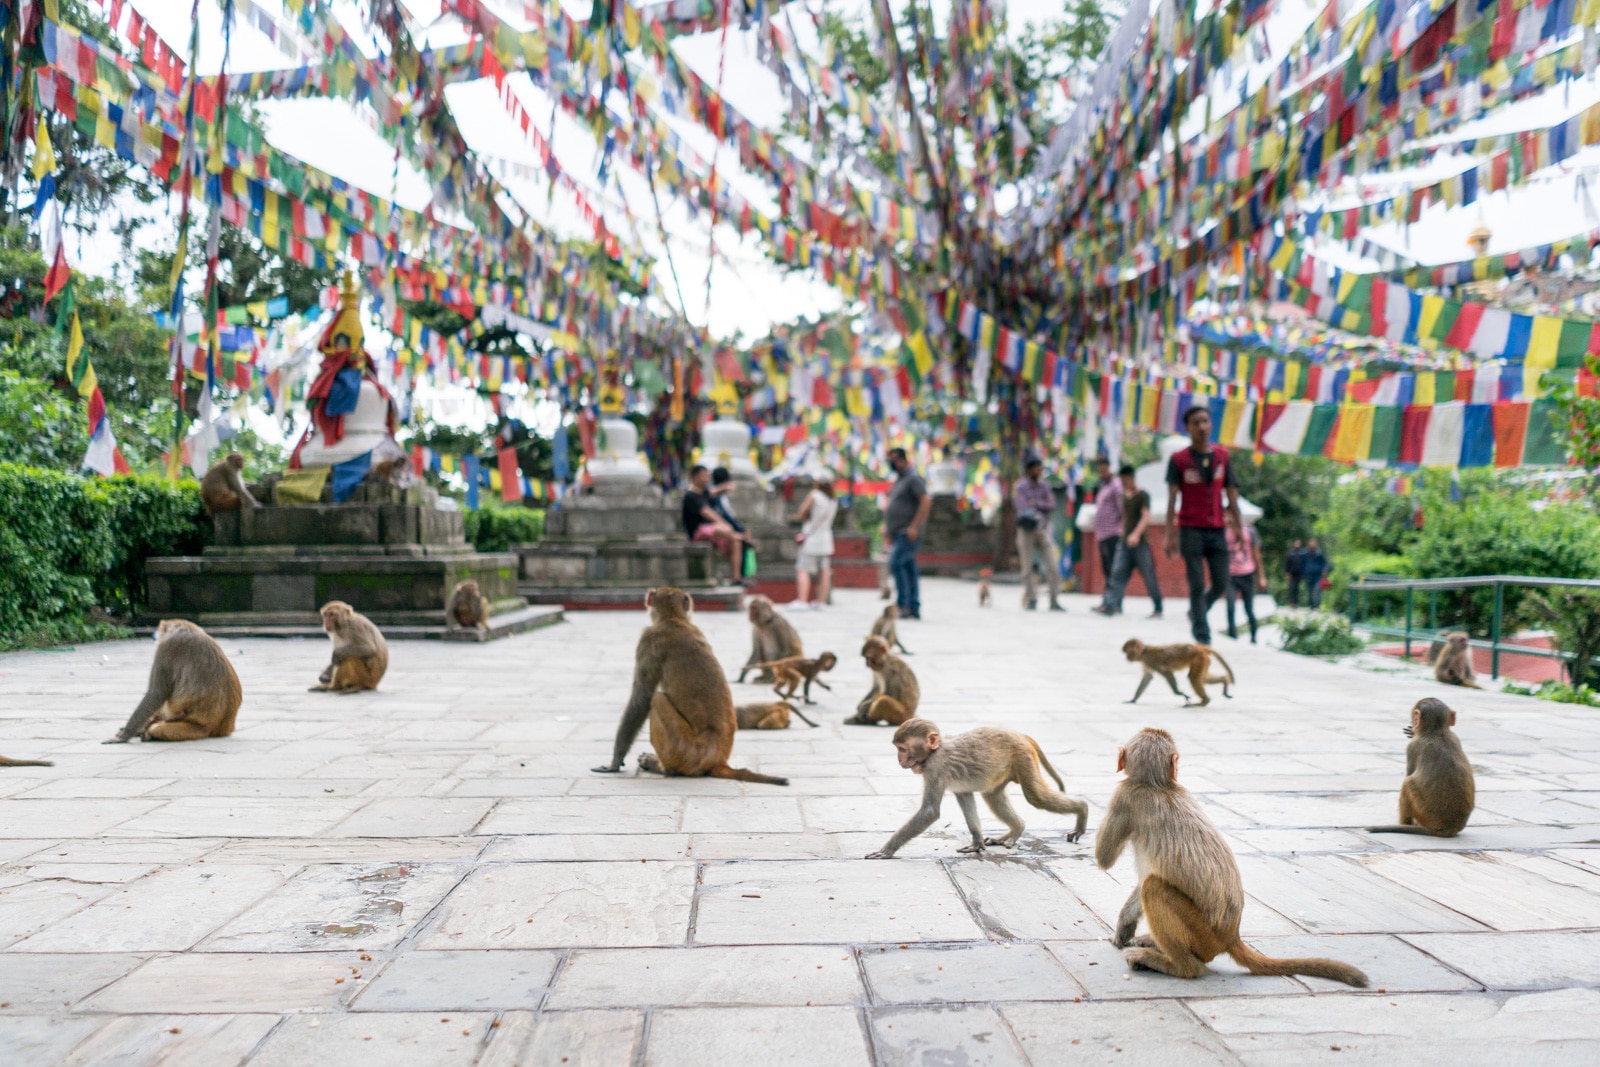 Things to do in Kathmandu, Nepal during monsoon - Rhesus monkeys playing at Swayambhunath Stupa/Monkey temple - Lost With Purpose travel blog